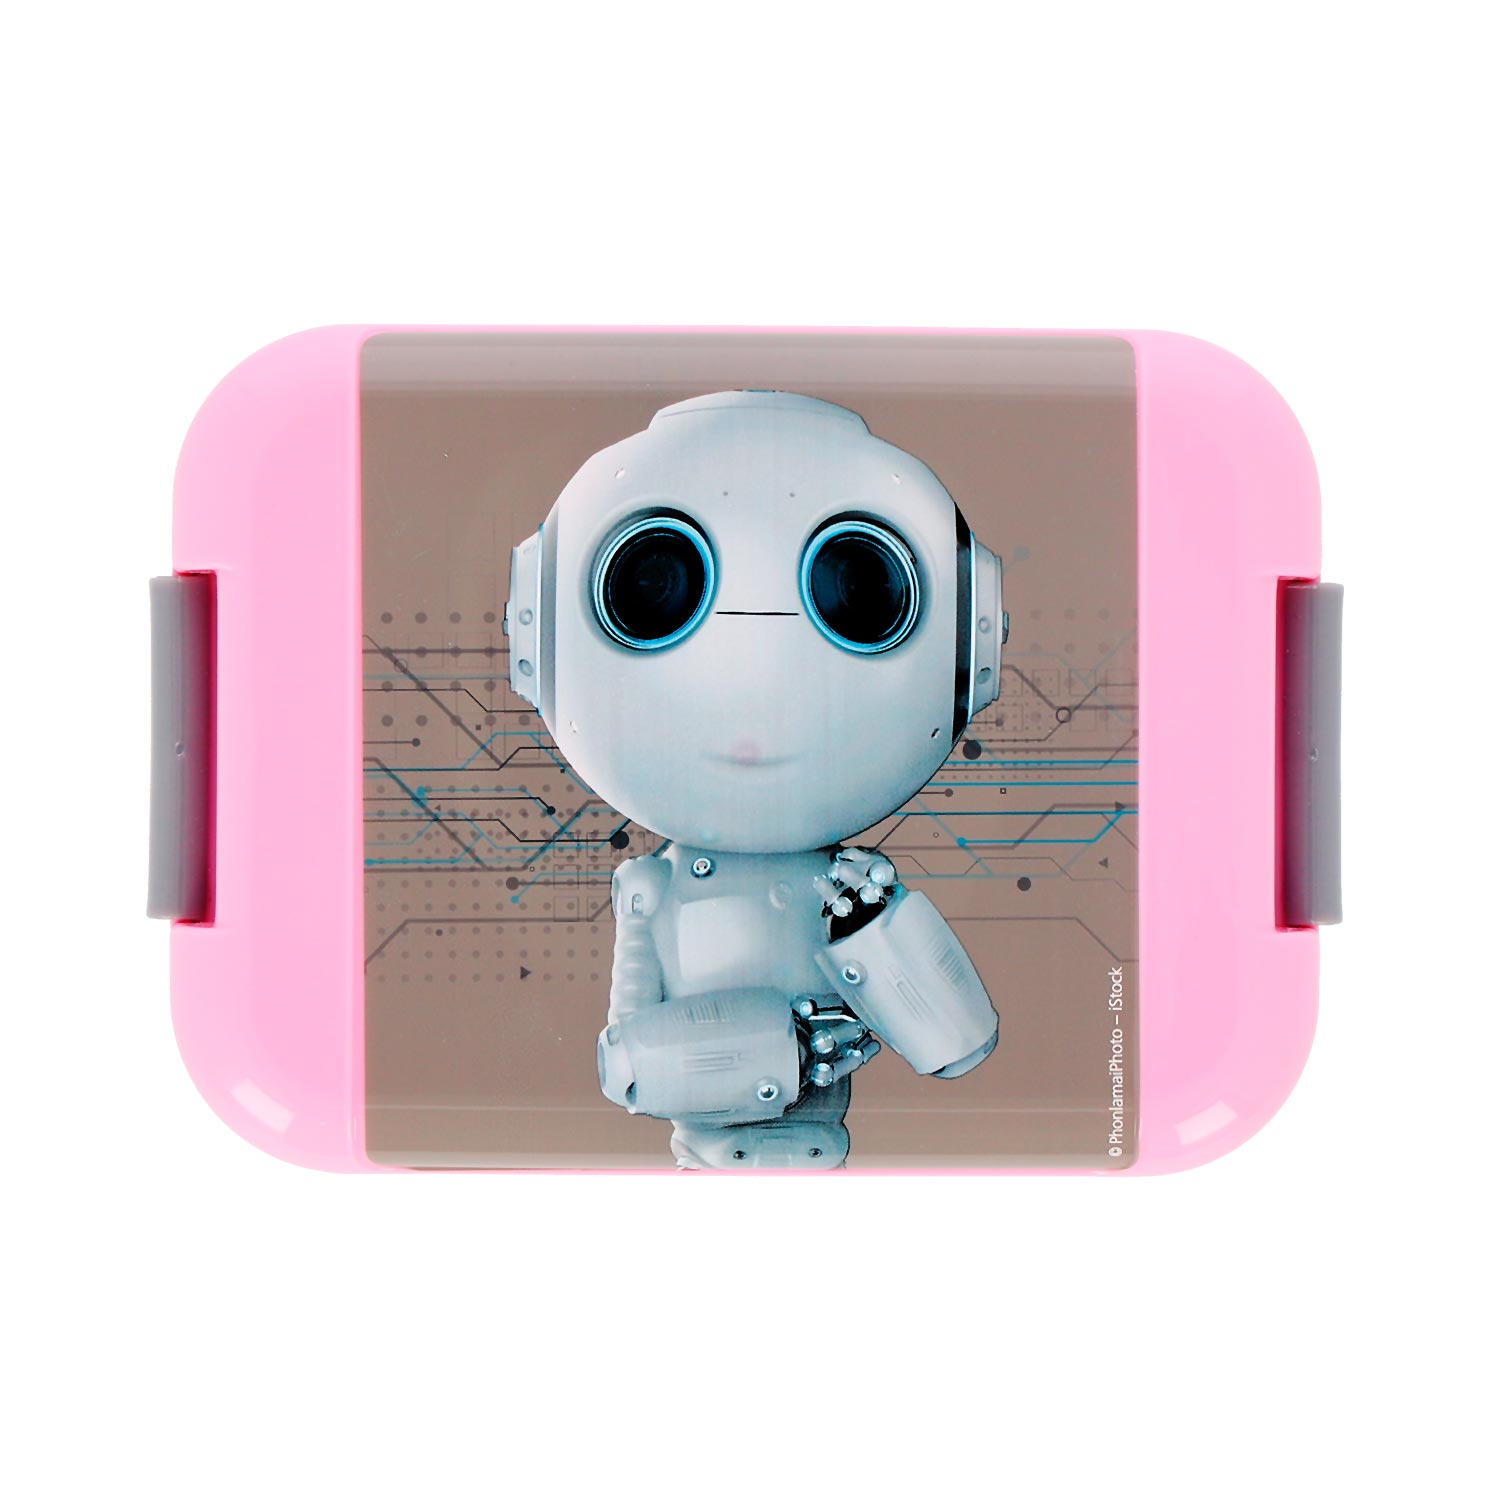 Brotdose mit Motiv "Robbie Roboter", Lunchbox, Frühstücksbox, rosa